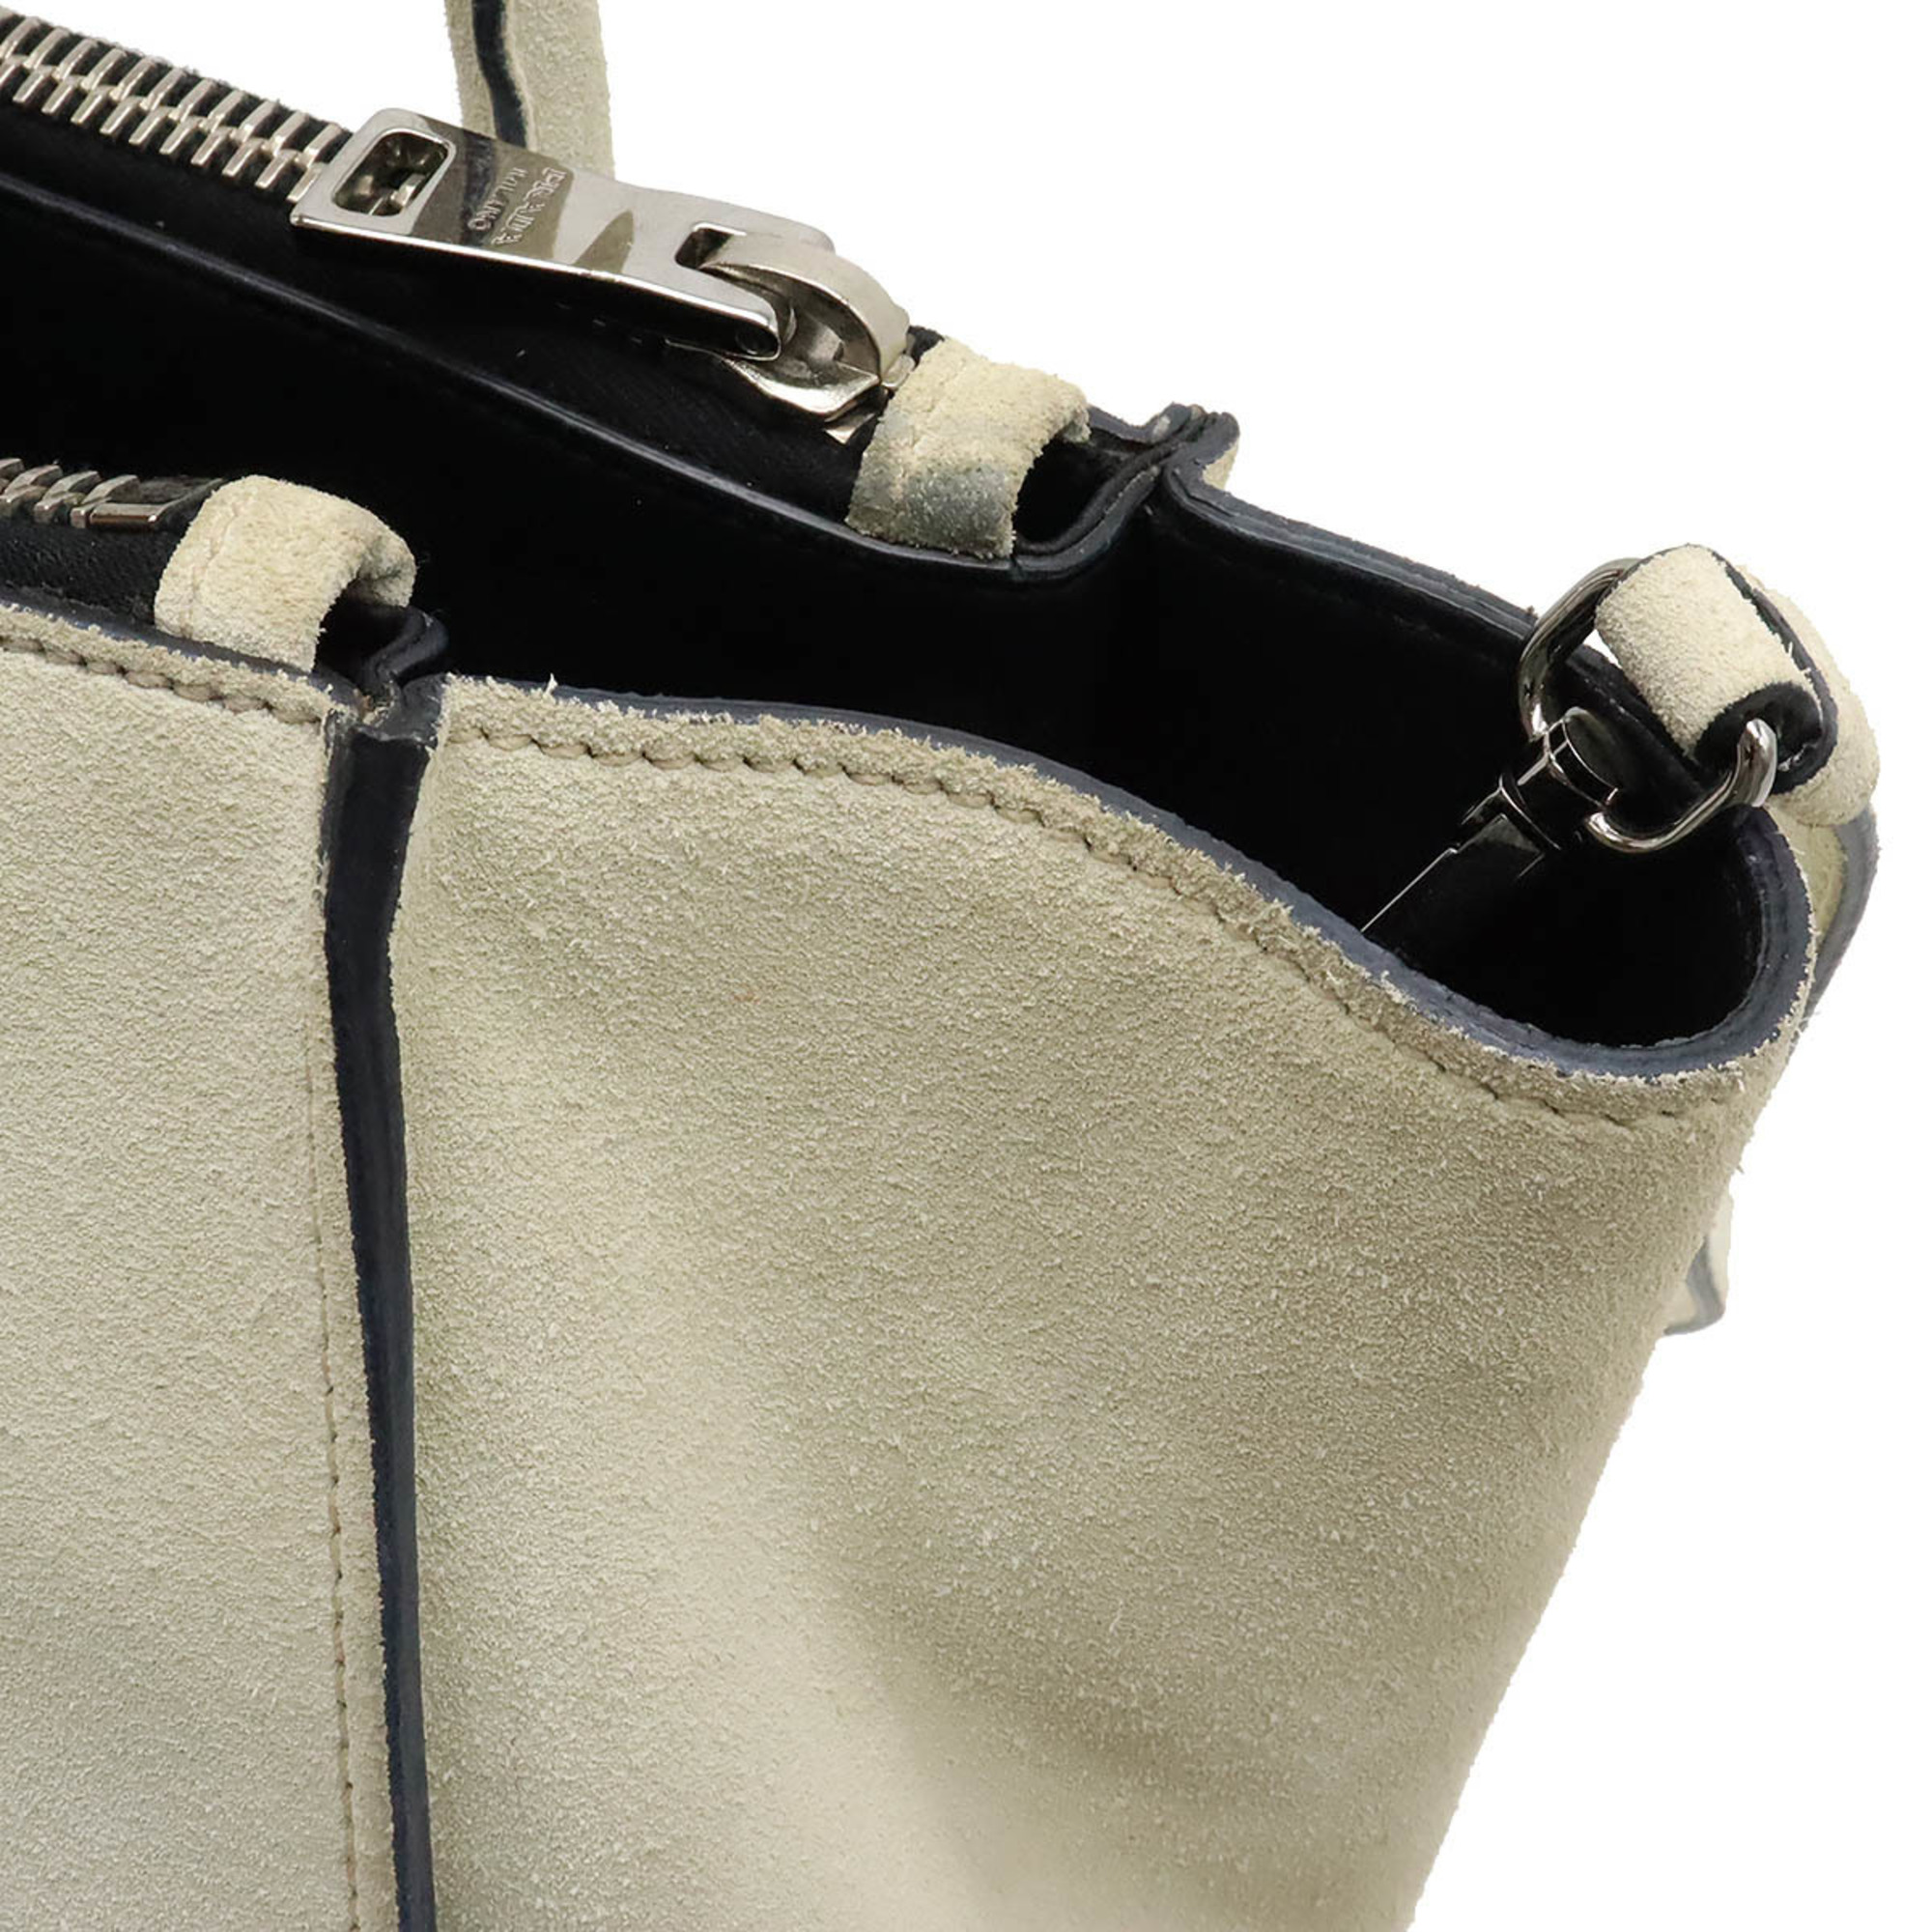 PRADA W Zip Handbag Shoulder Bag Suede Leather TALCO Ivory Boutique Purchased Item BN2625